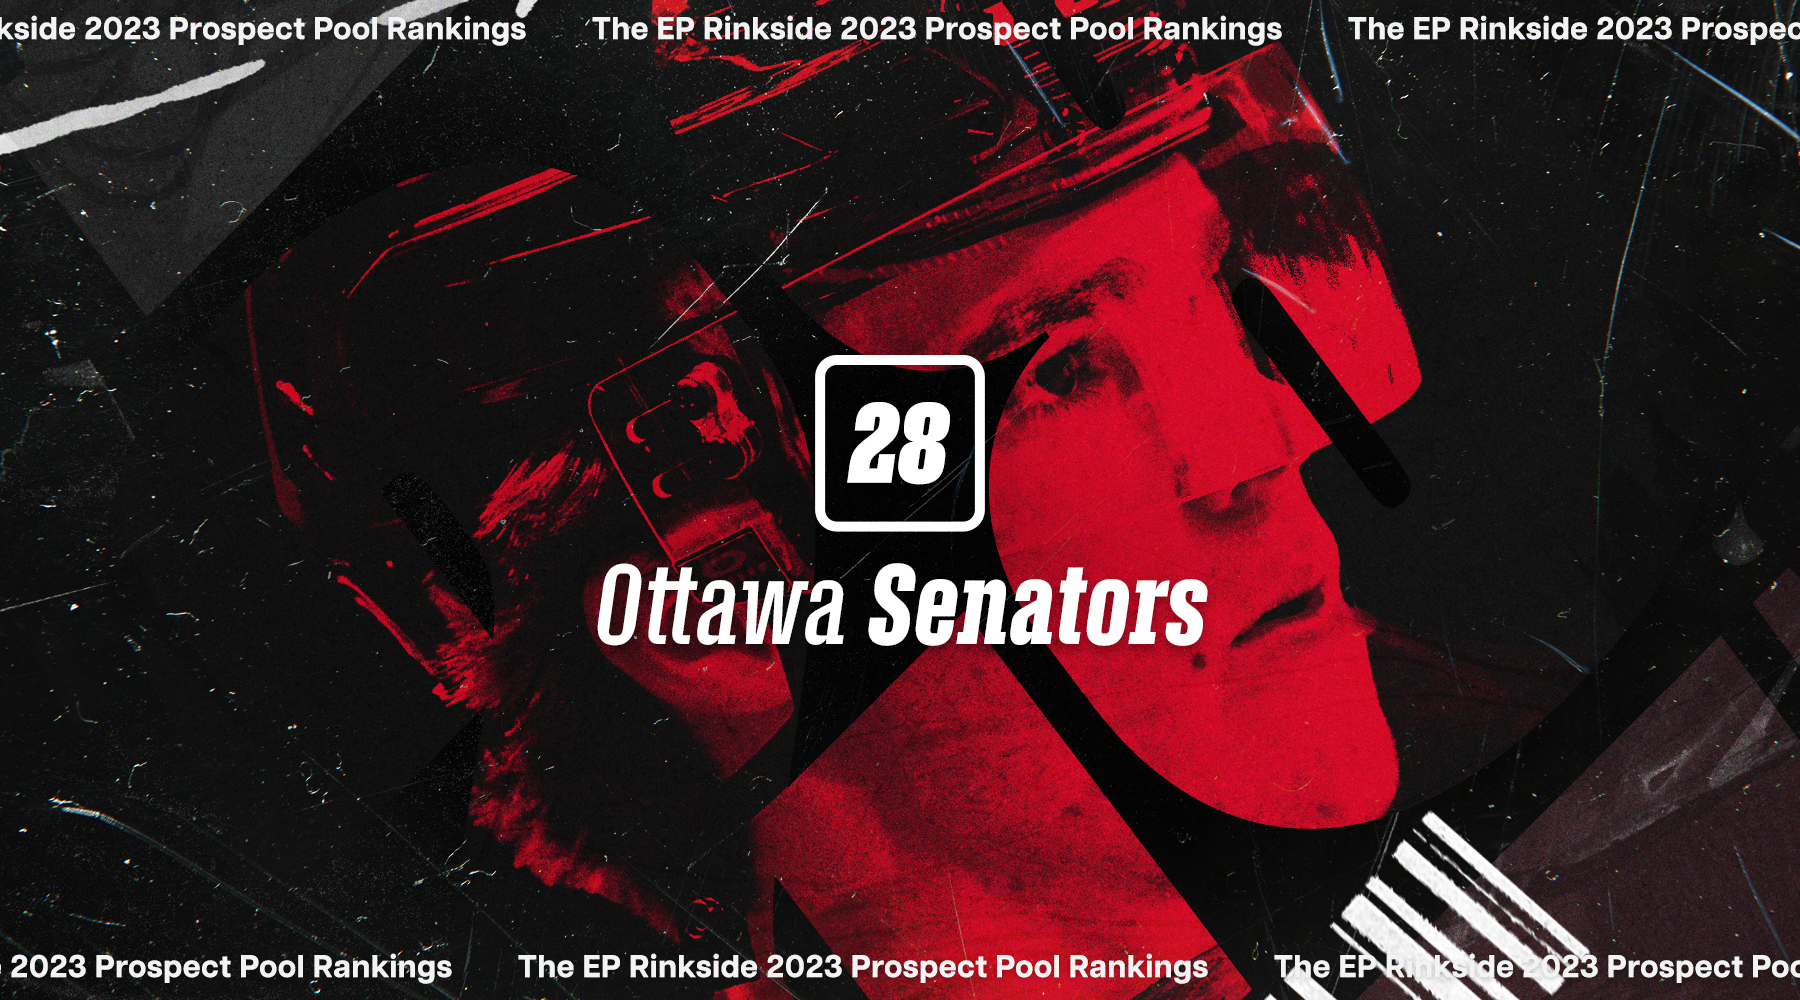 Ottawa Senators rank No. 7 in NHL Pipeline Rankings for 2023 - The Athletic